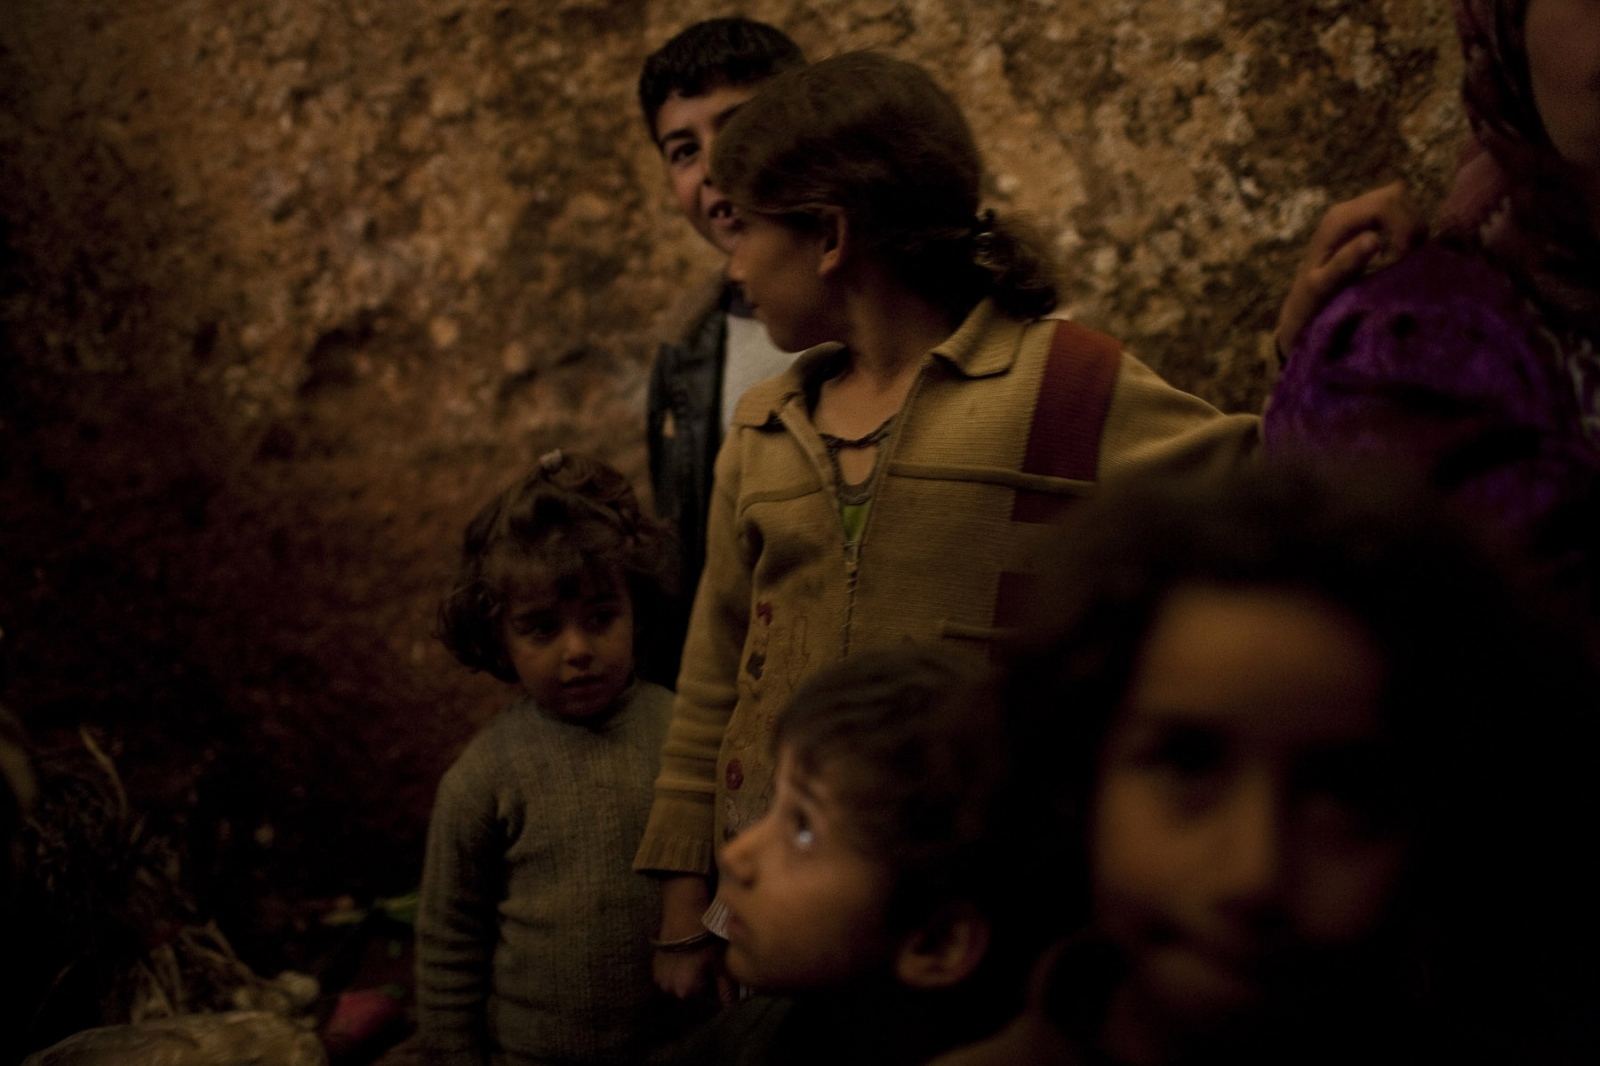 Syria: War on Civilians